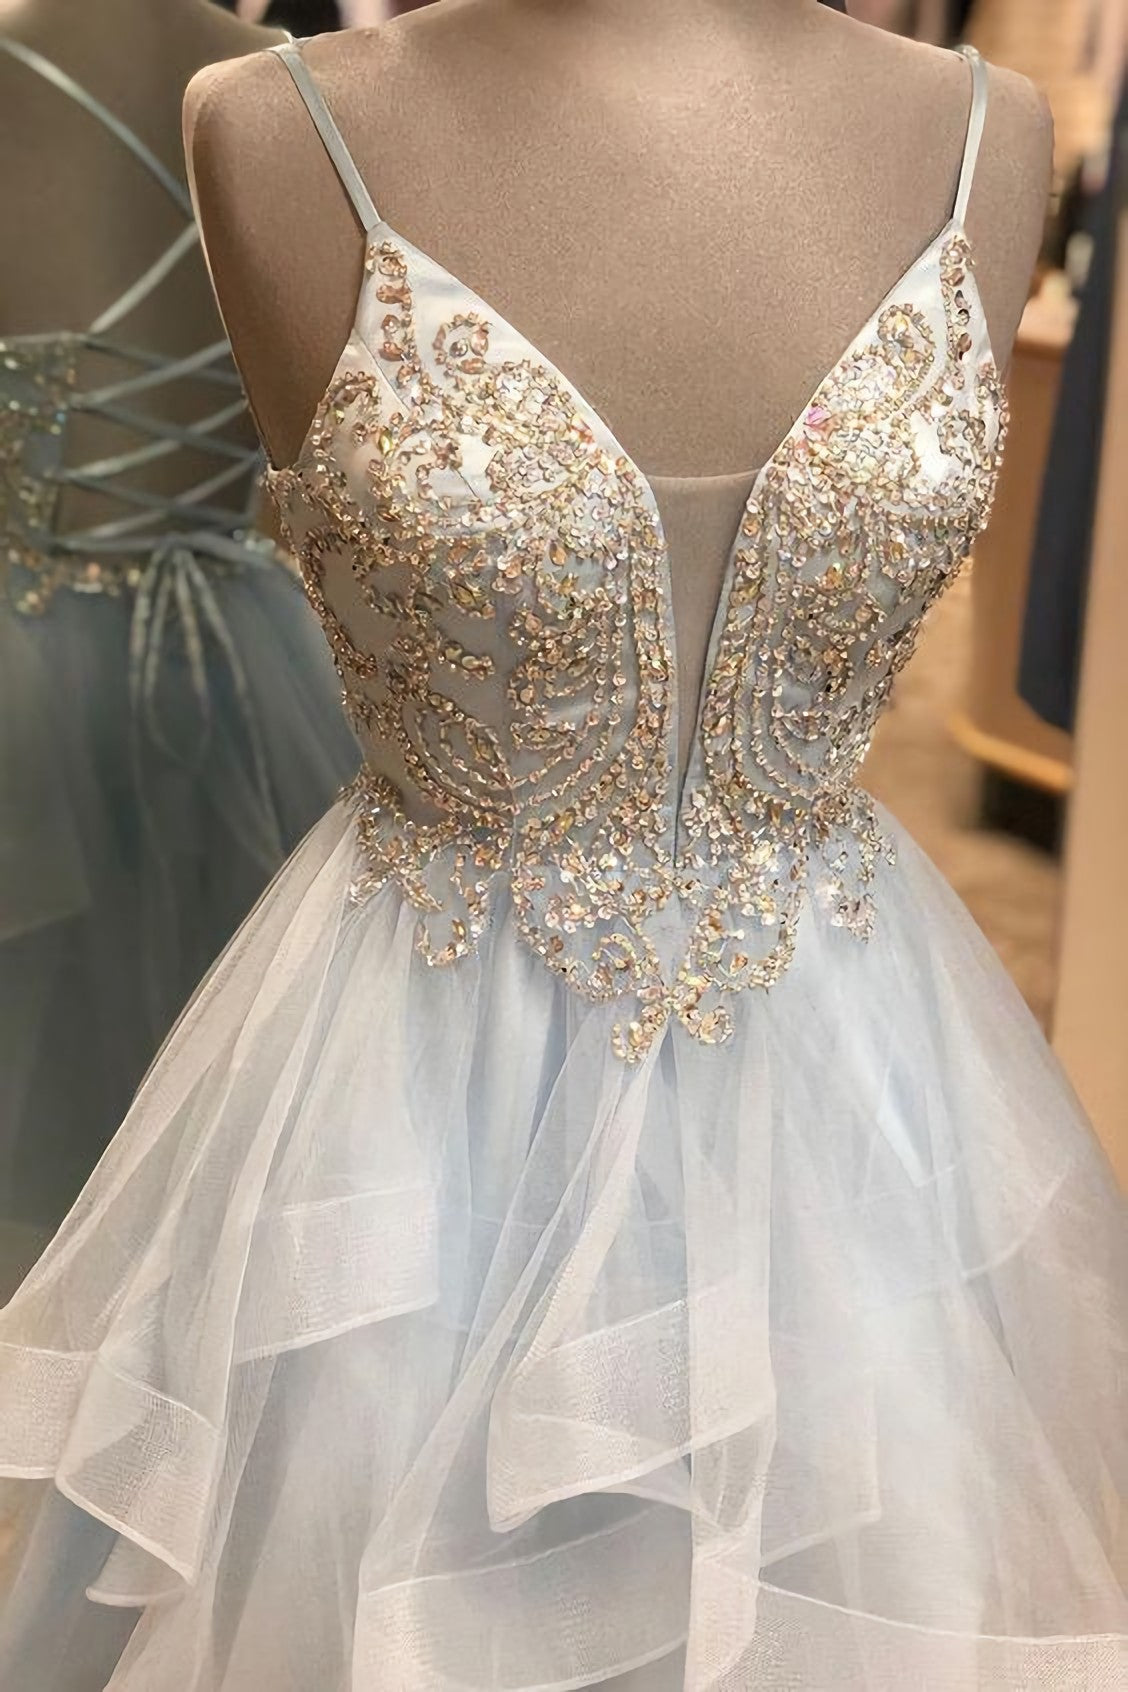 Wedding Decor, A Line Spaghetti Straps Light Sky Blue Short Homecoming Dress, With Beading